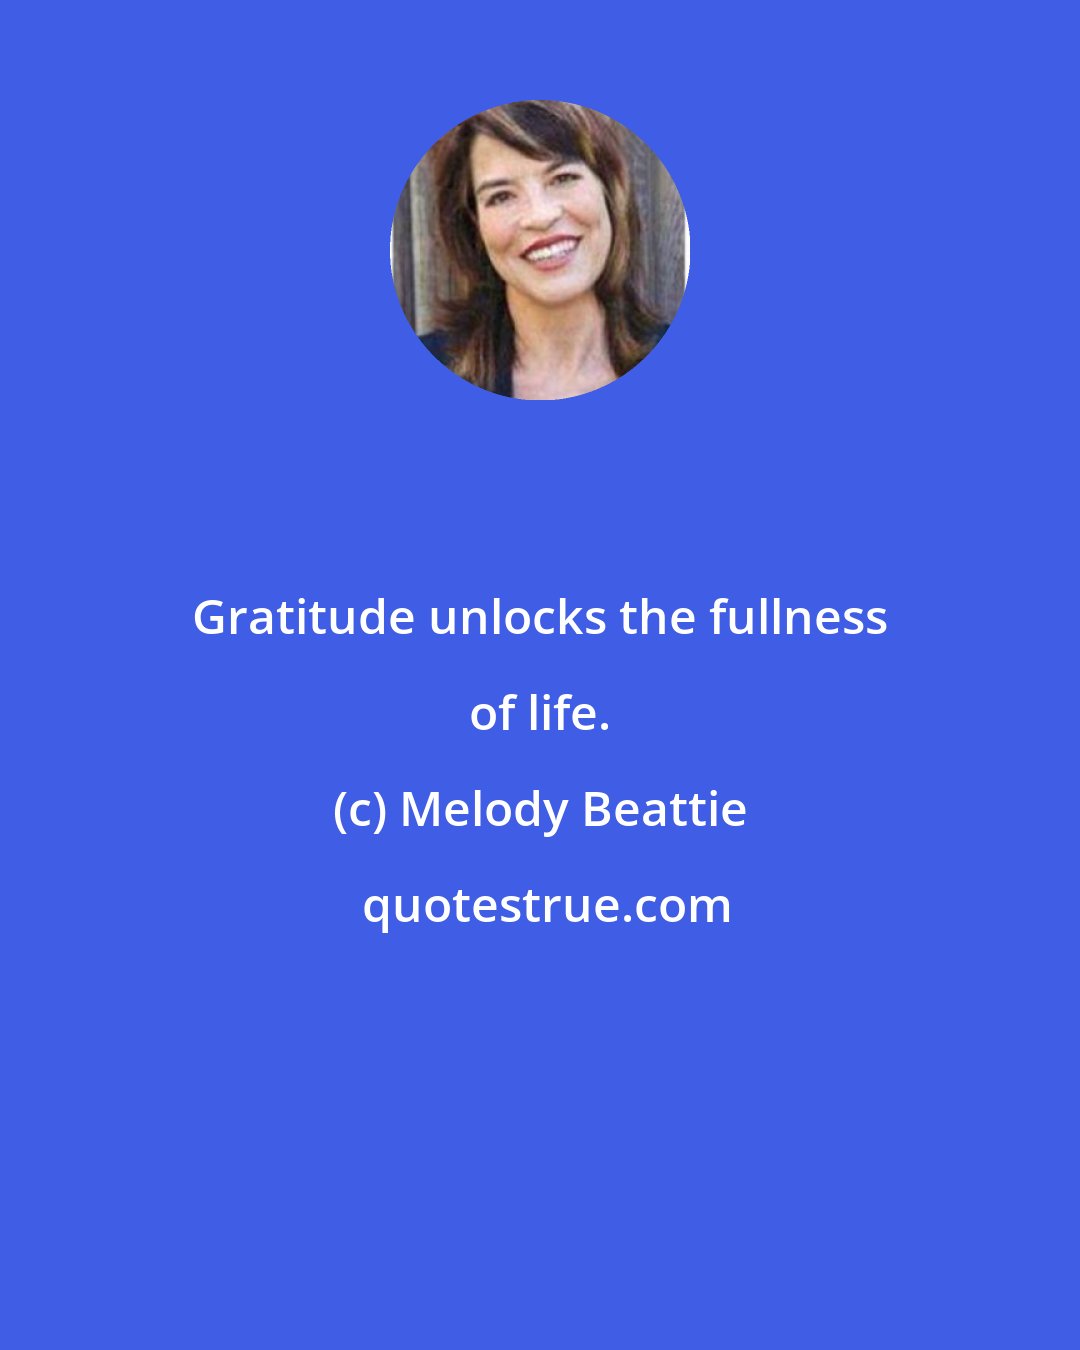 Melody Beattie: Gratitude unlocks the fullness of life.